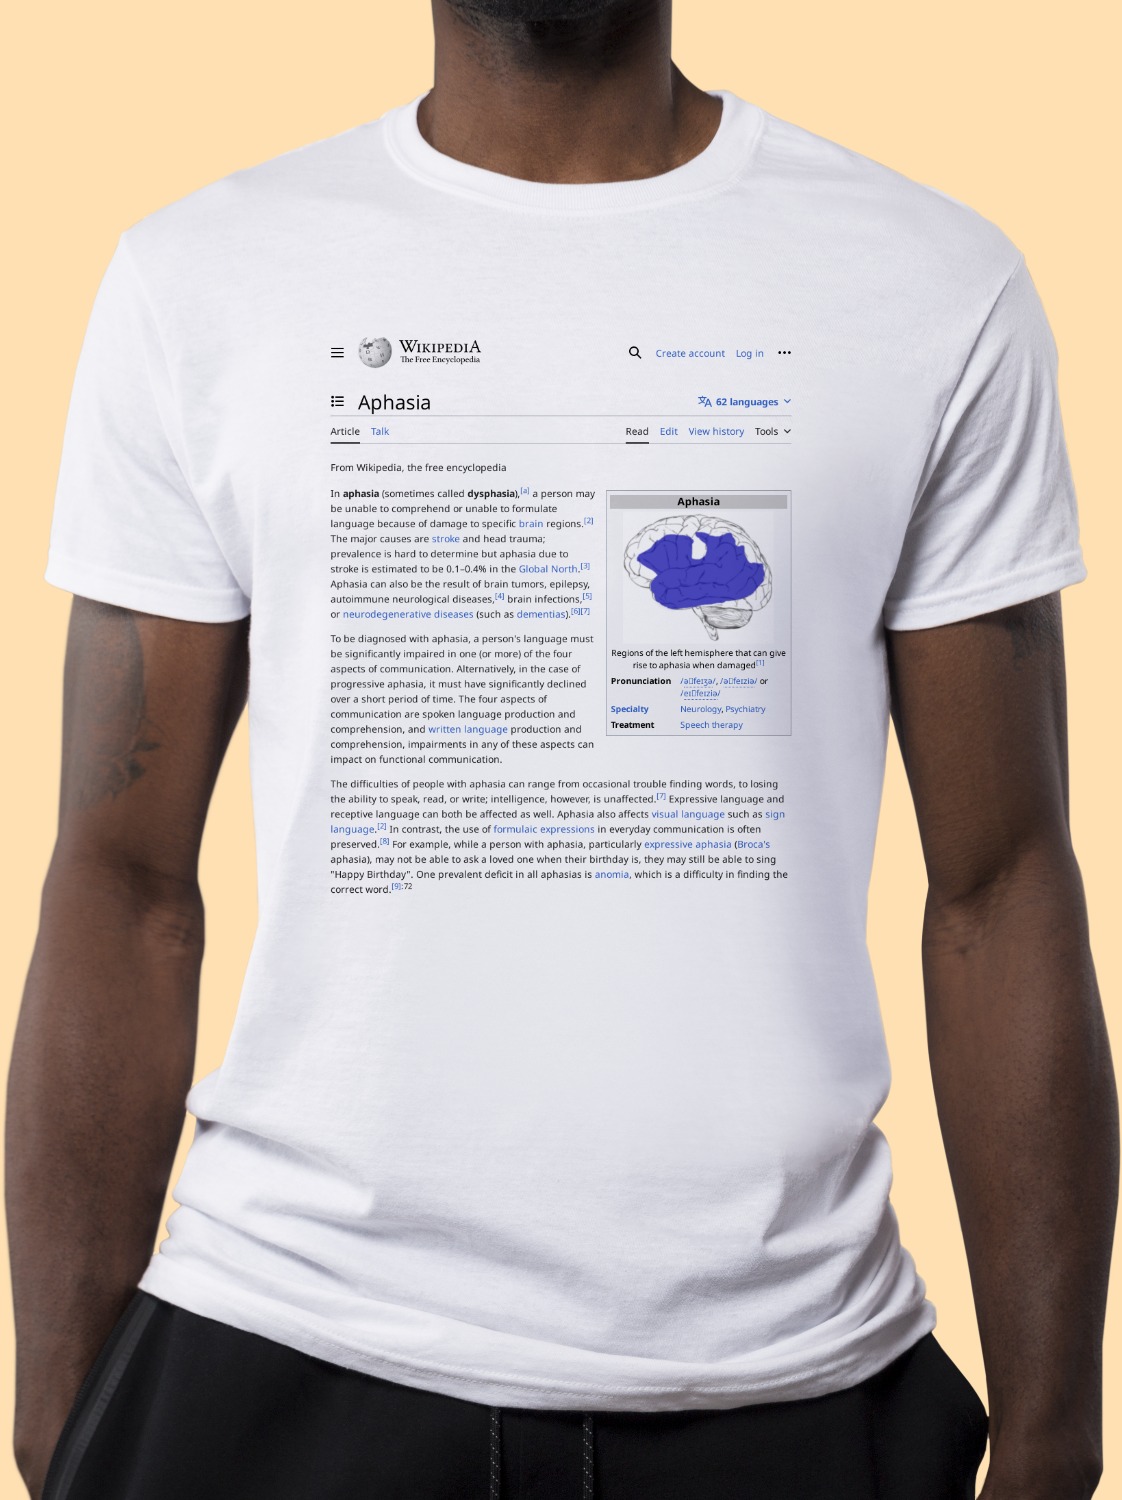 Aphasia Wikipedia Shirt